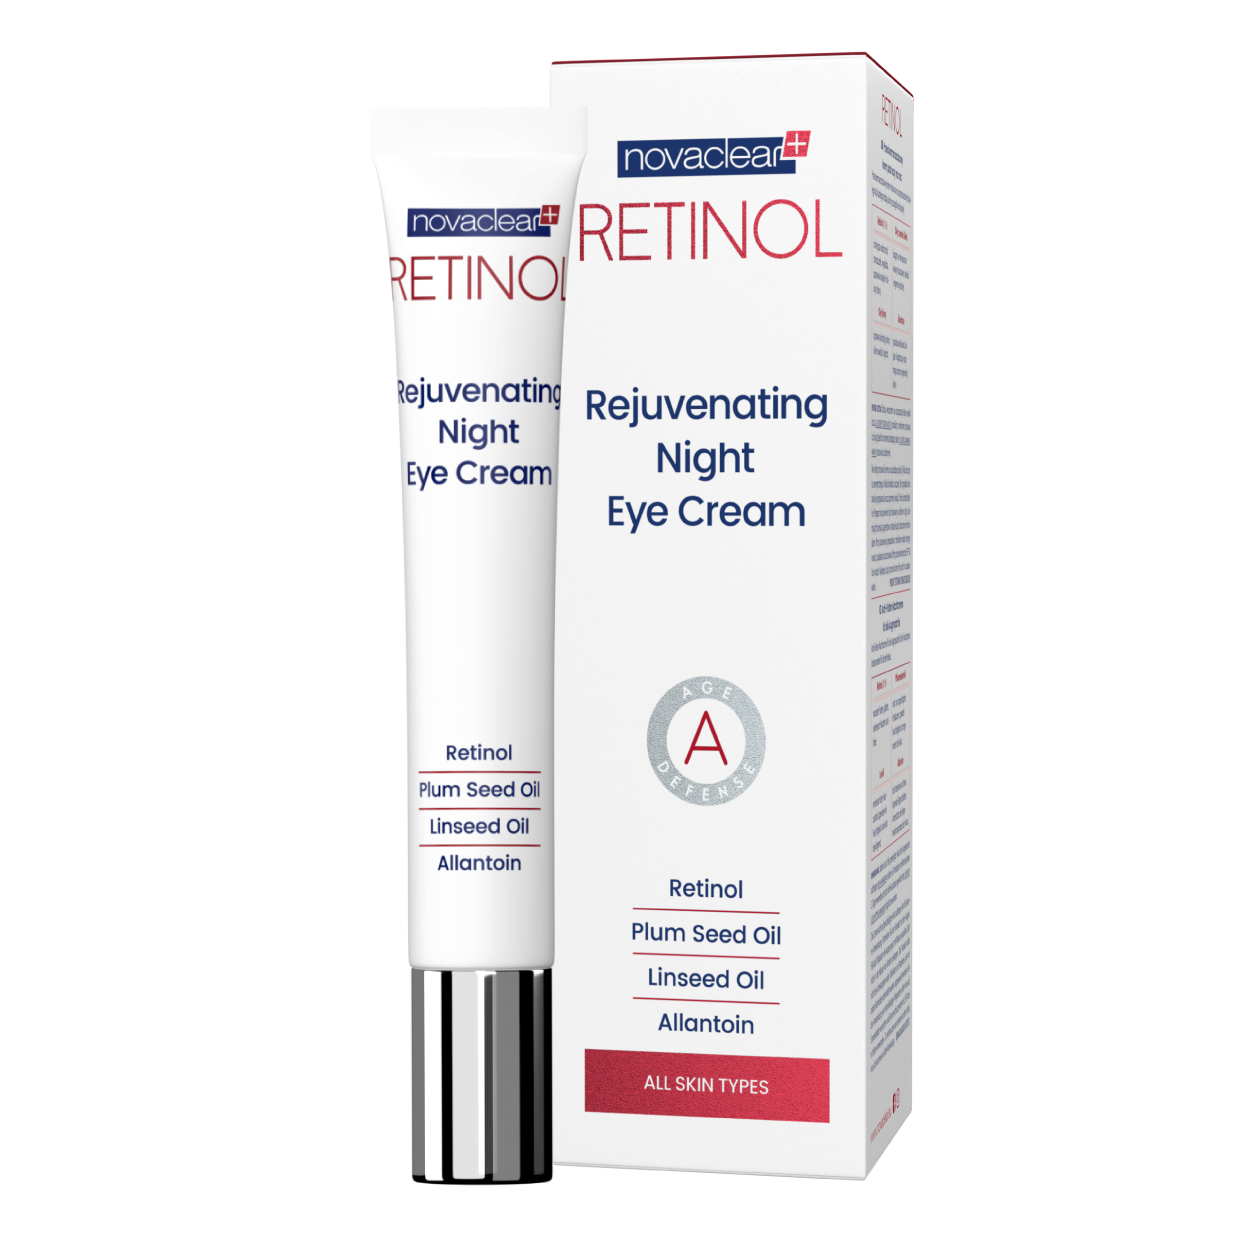 novaclear-retinol-rejuvenating-night-eye-cream